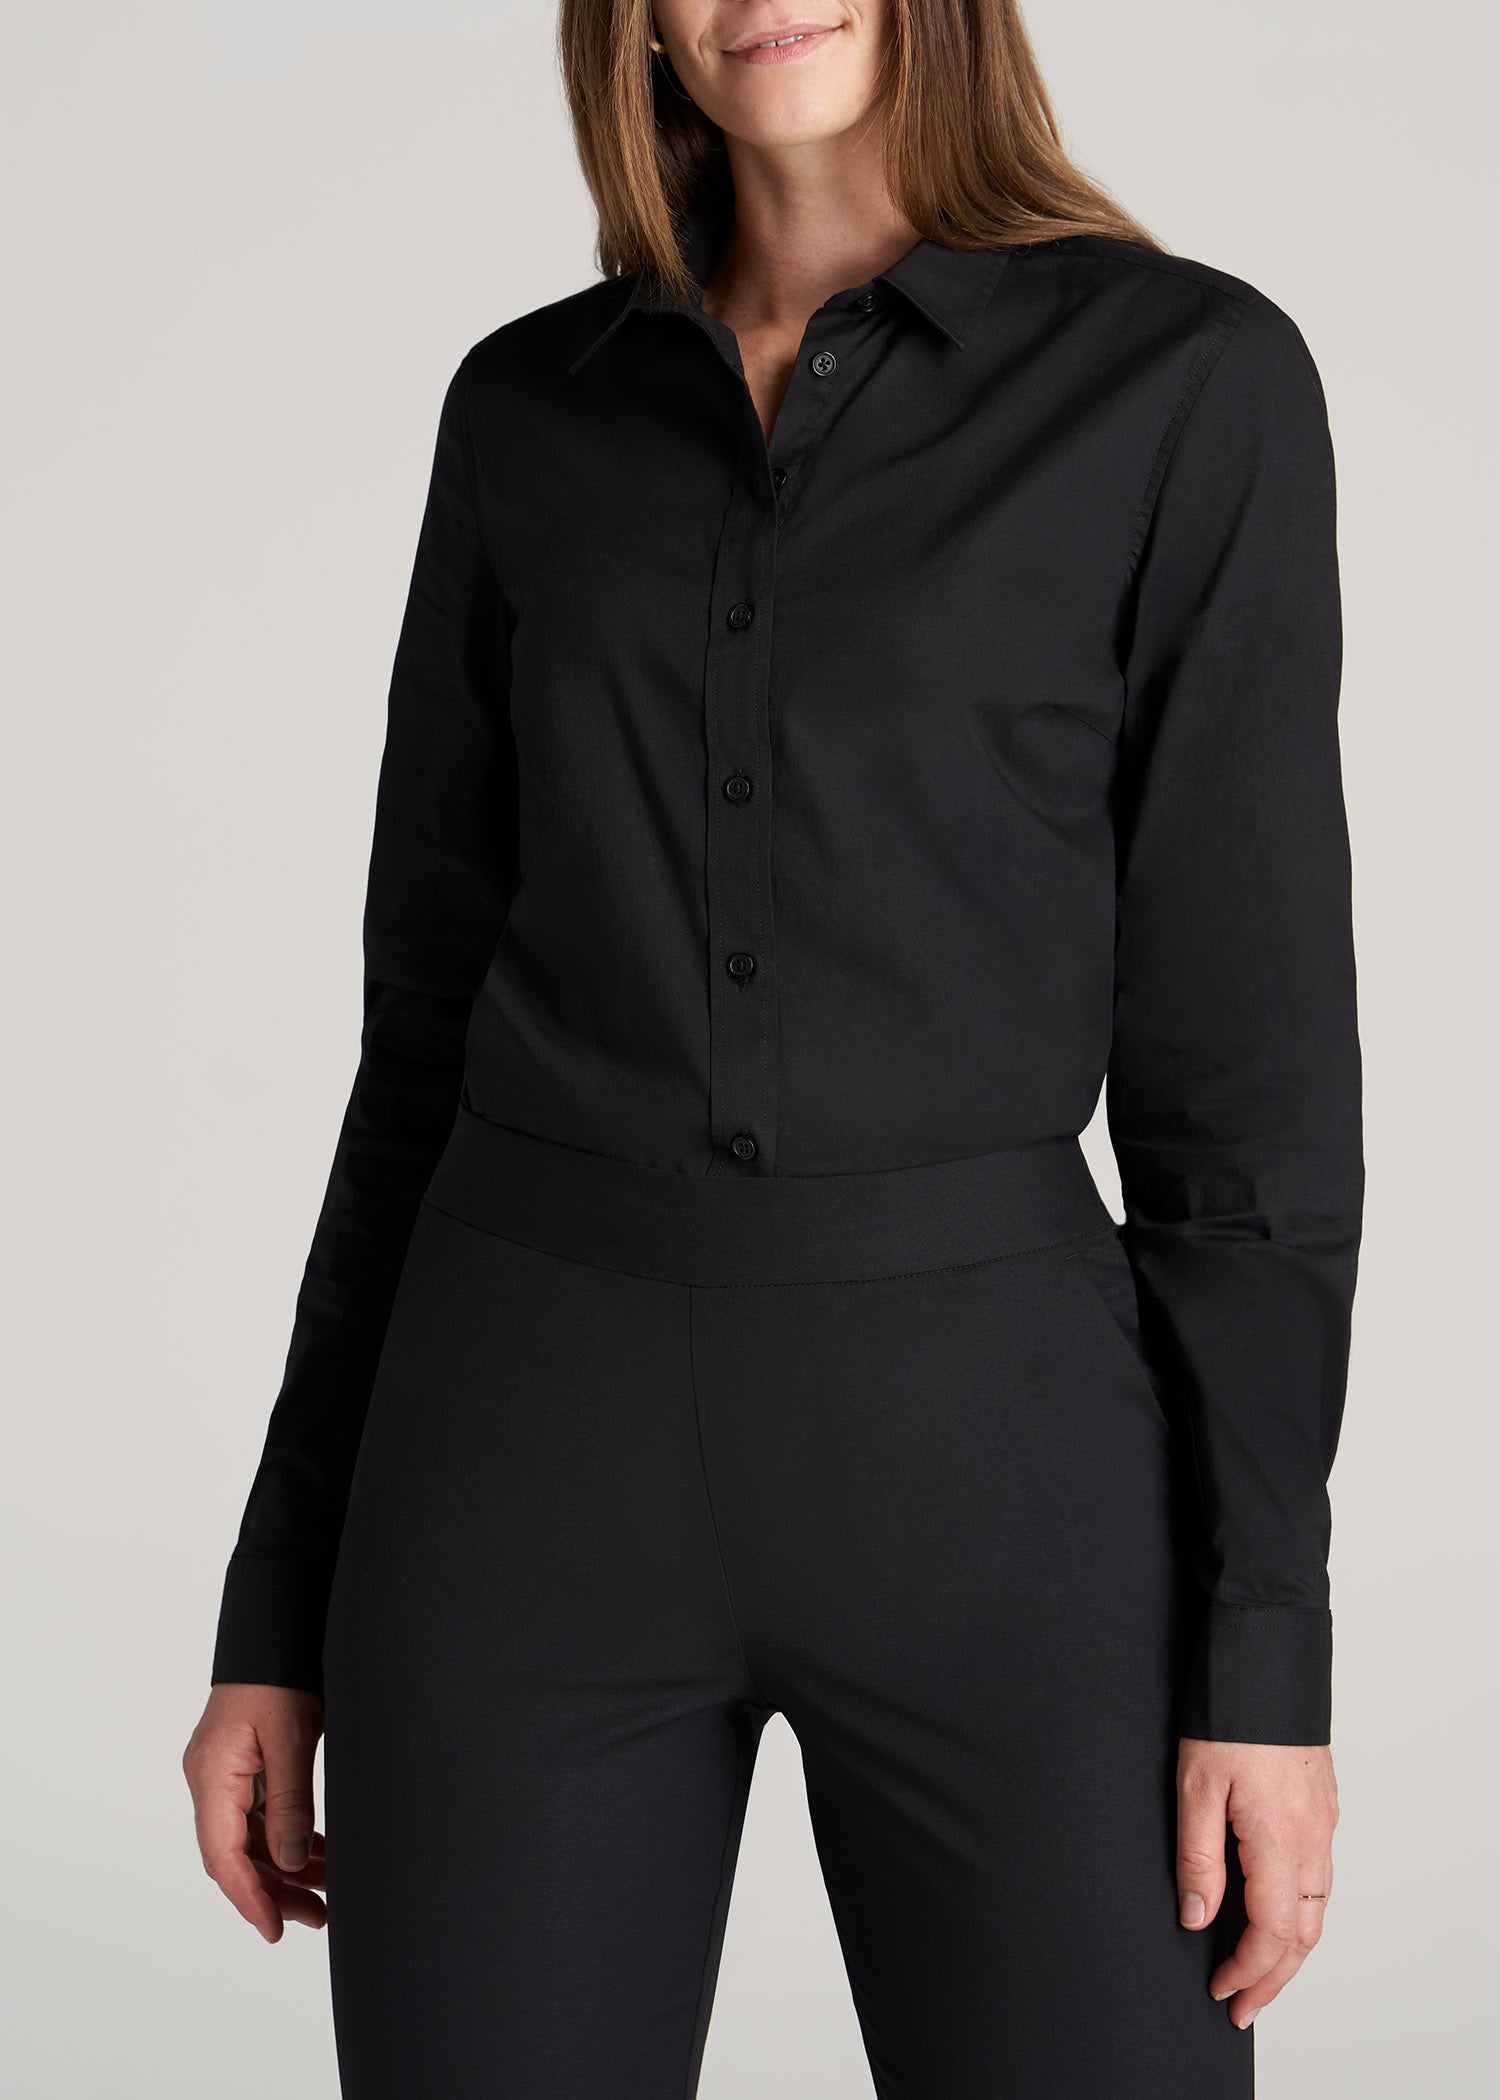 Women's Black Long Sleeve Shirt With Built in Bra 